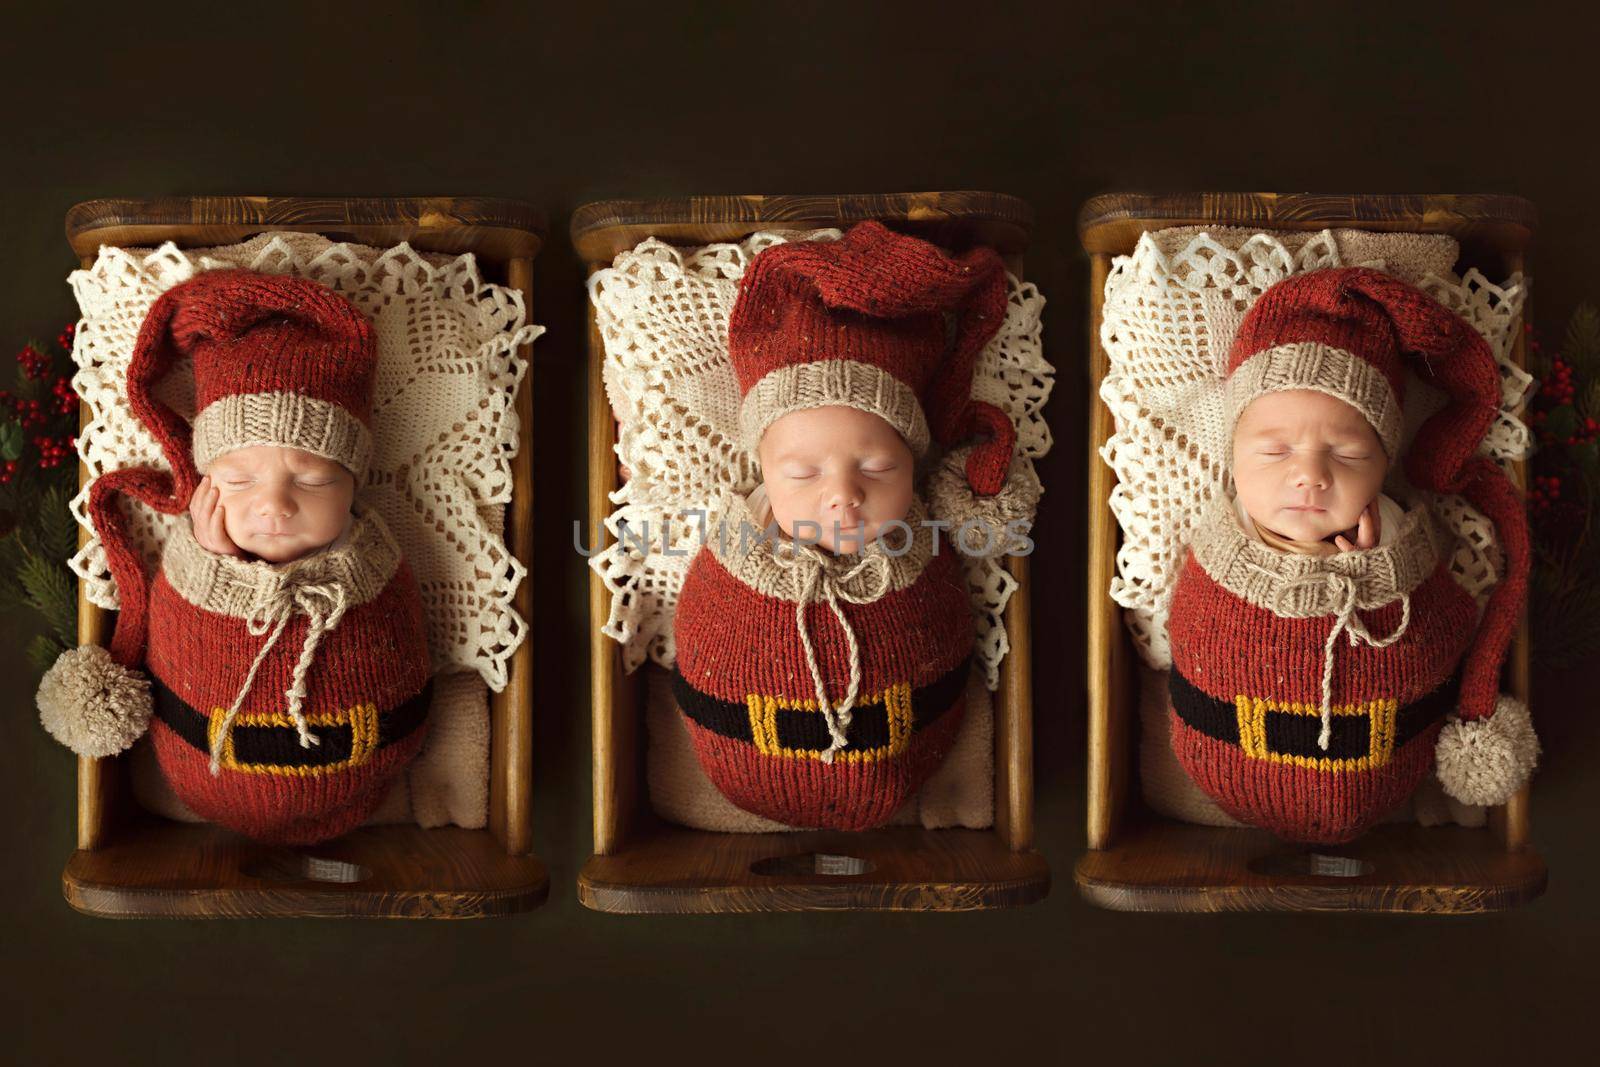 Three newborn brothers sleep in cribs dressed as elves. High quality photo